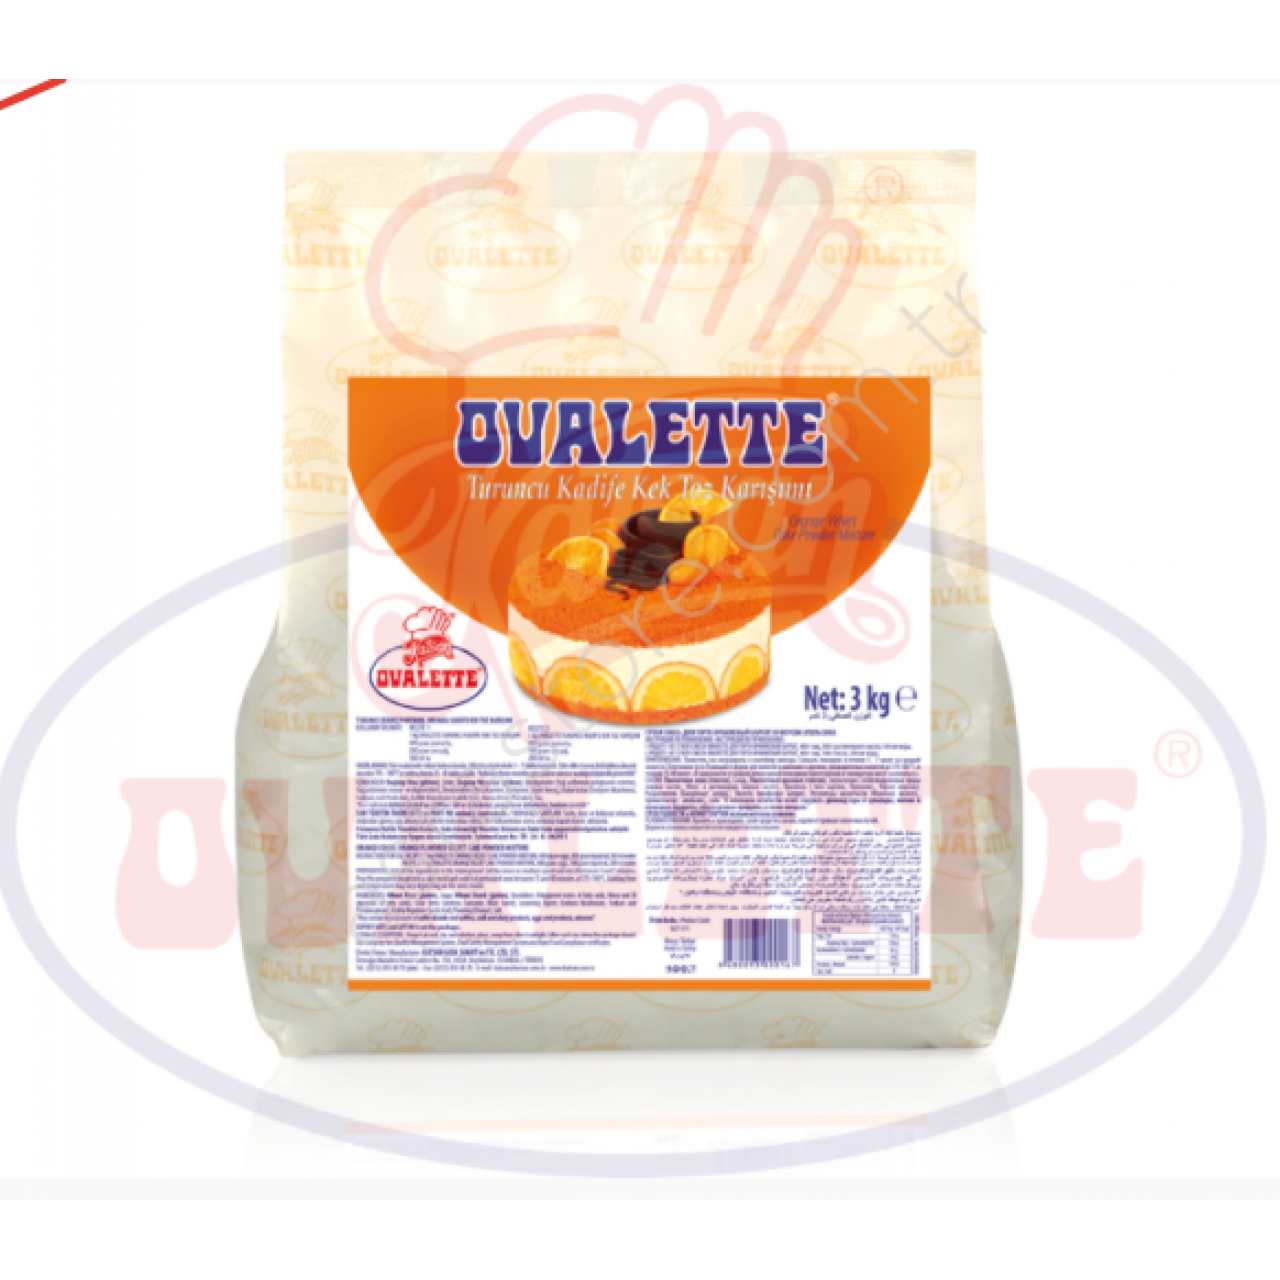 Ovalette Turuncu Kadife Kek Mix 3 Kg